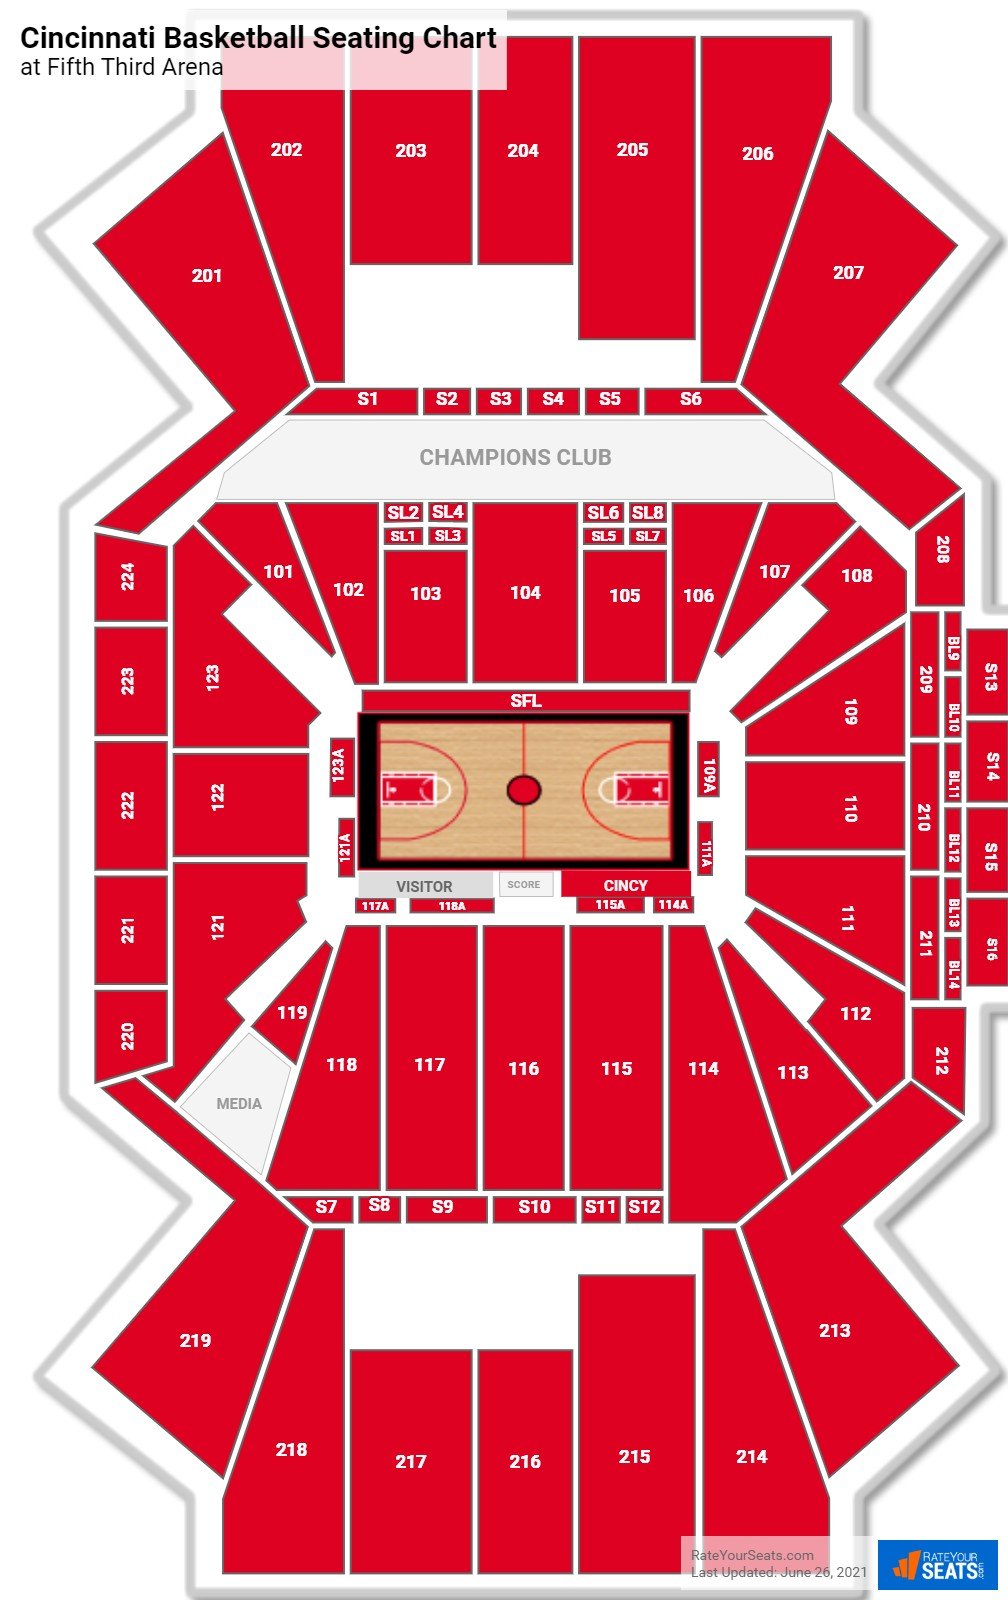 Cincinnati Bearcats Seating Chart at Fifth Third Arena